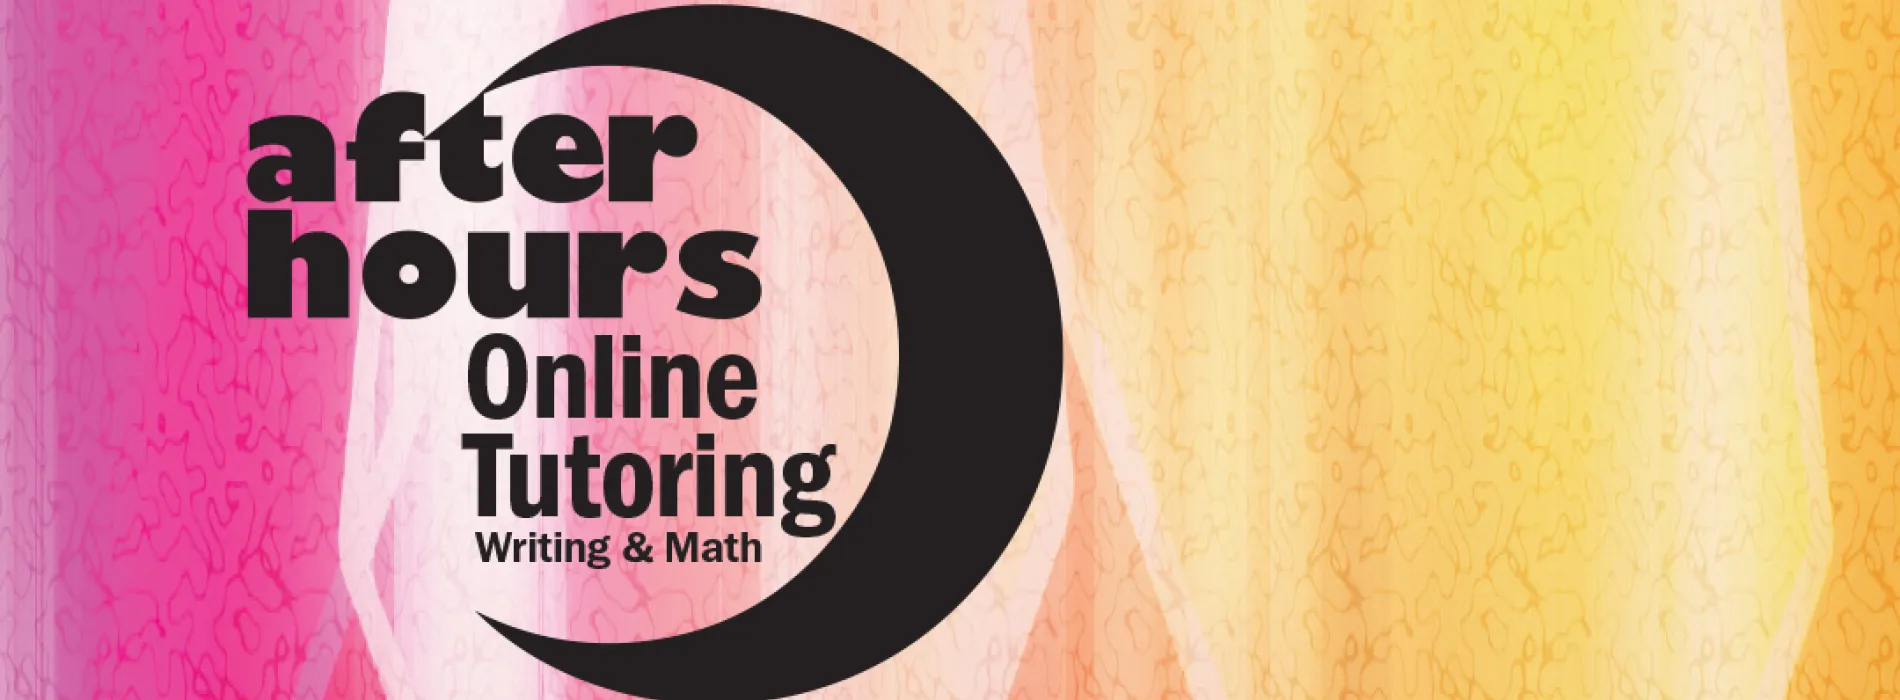 after hours online tutoring writing & math logo